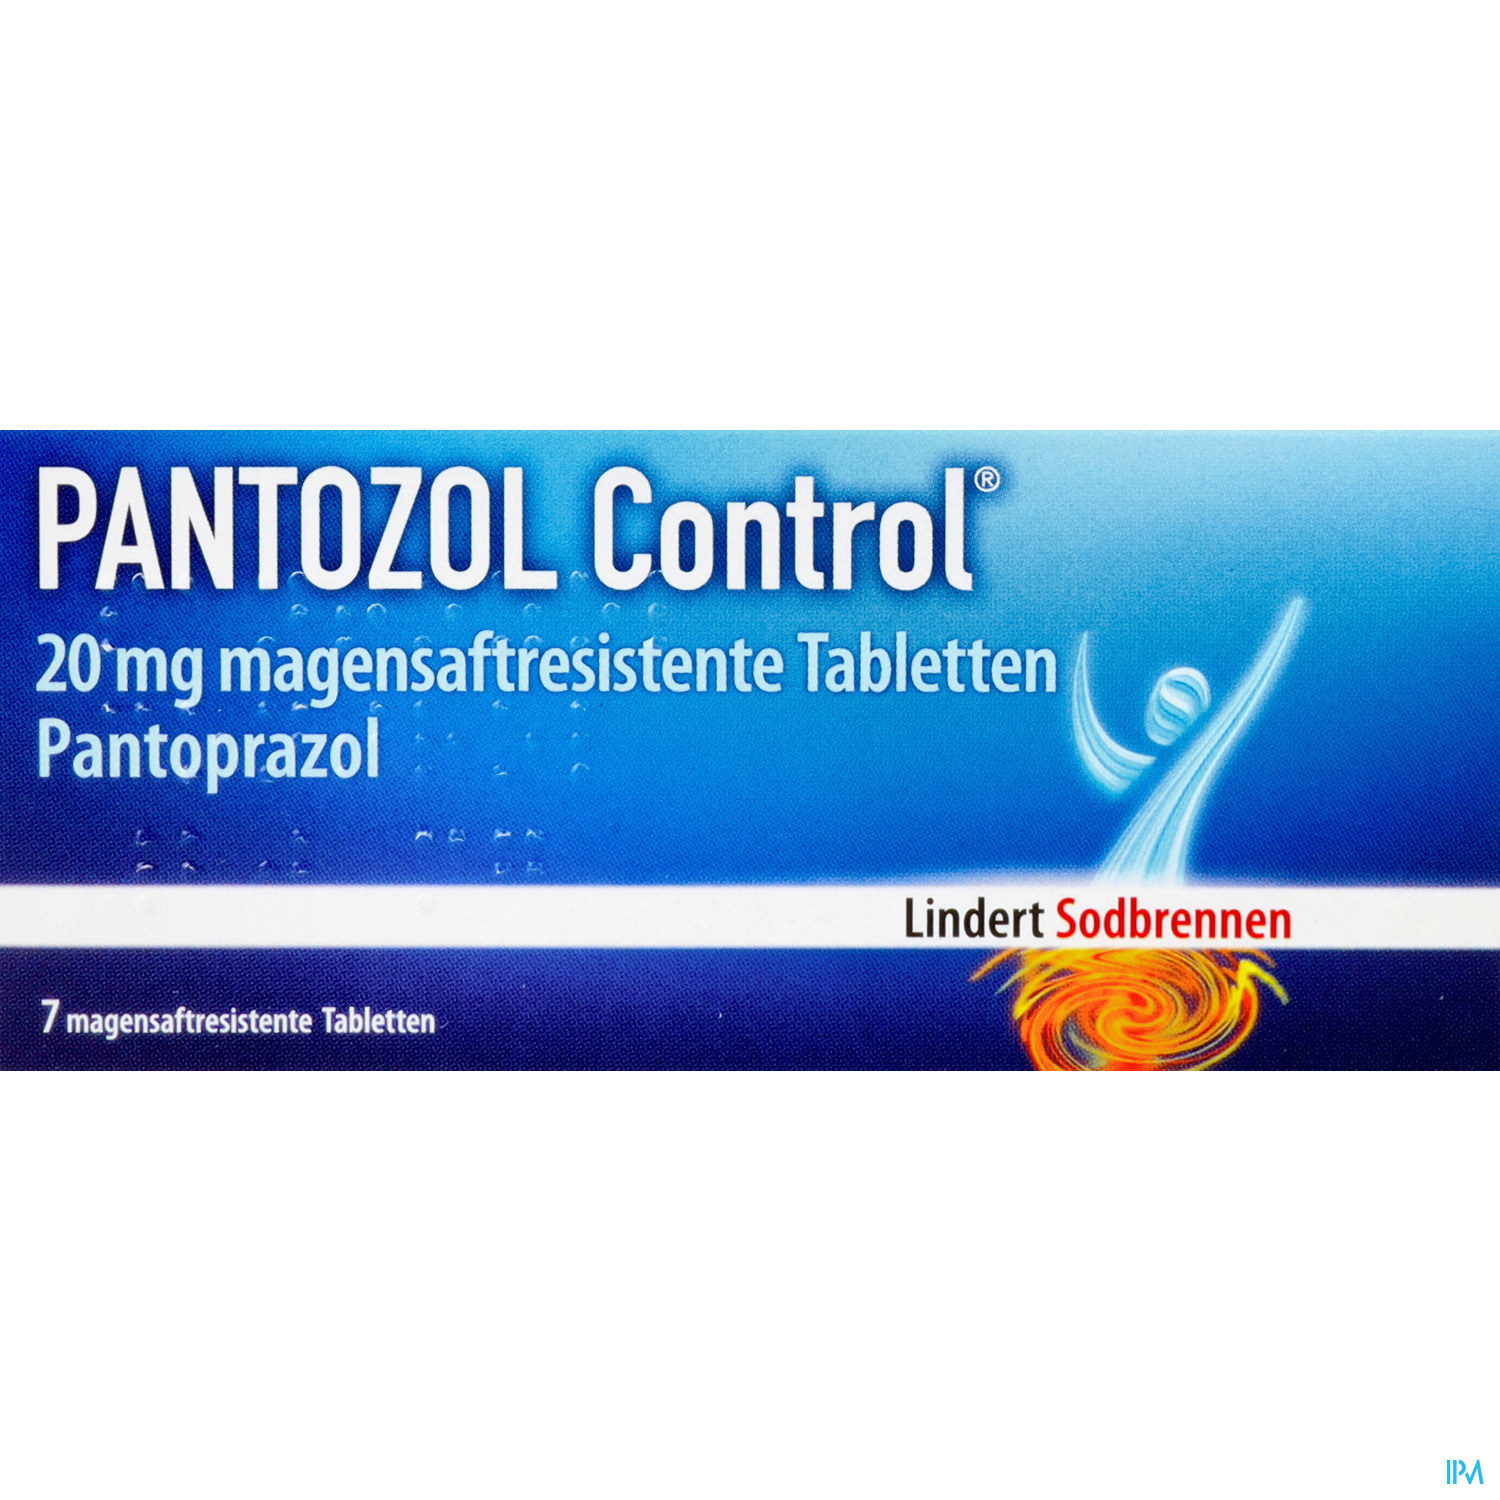 Pantozol Control 20 mg - magensaftresistente Tabletten